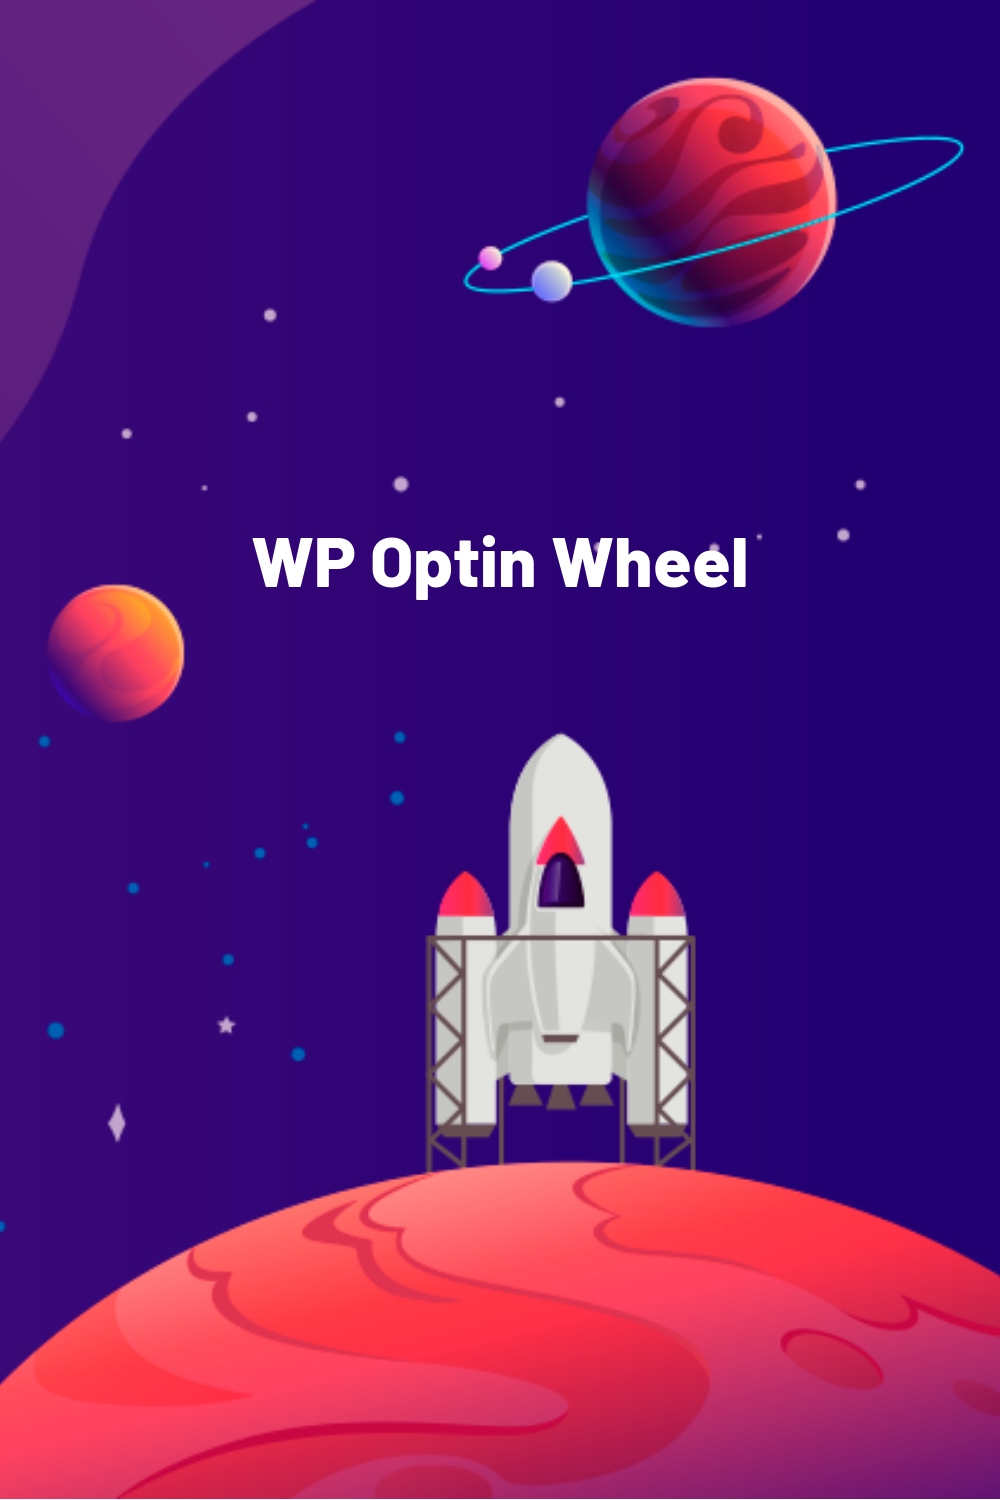 WP Optin Wheel